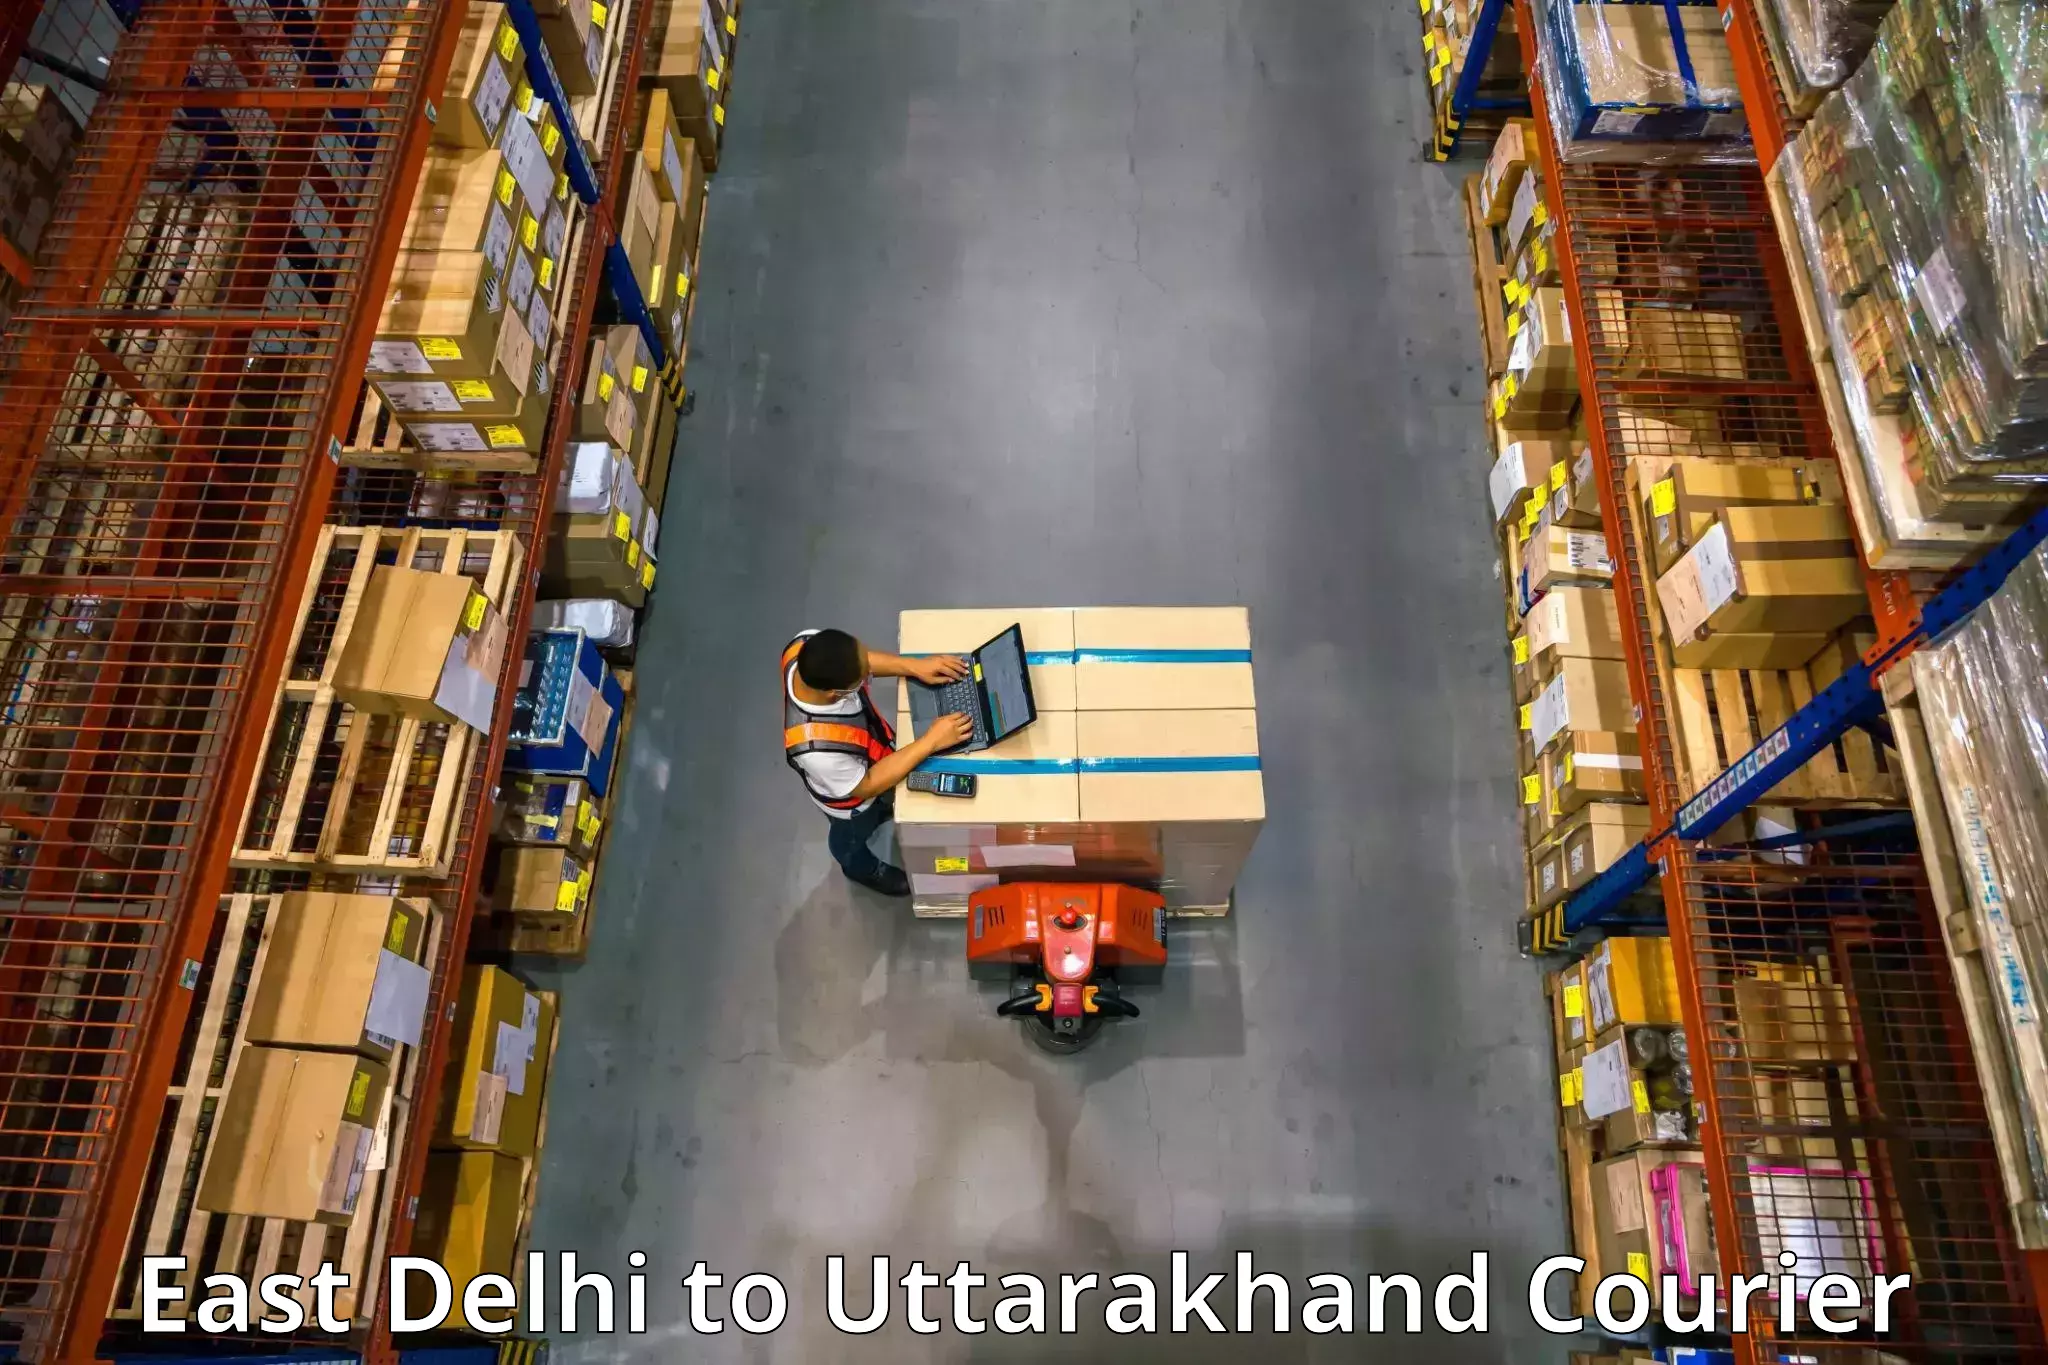 Professional moving company East Delhi to Uttarakhand